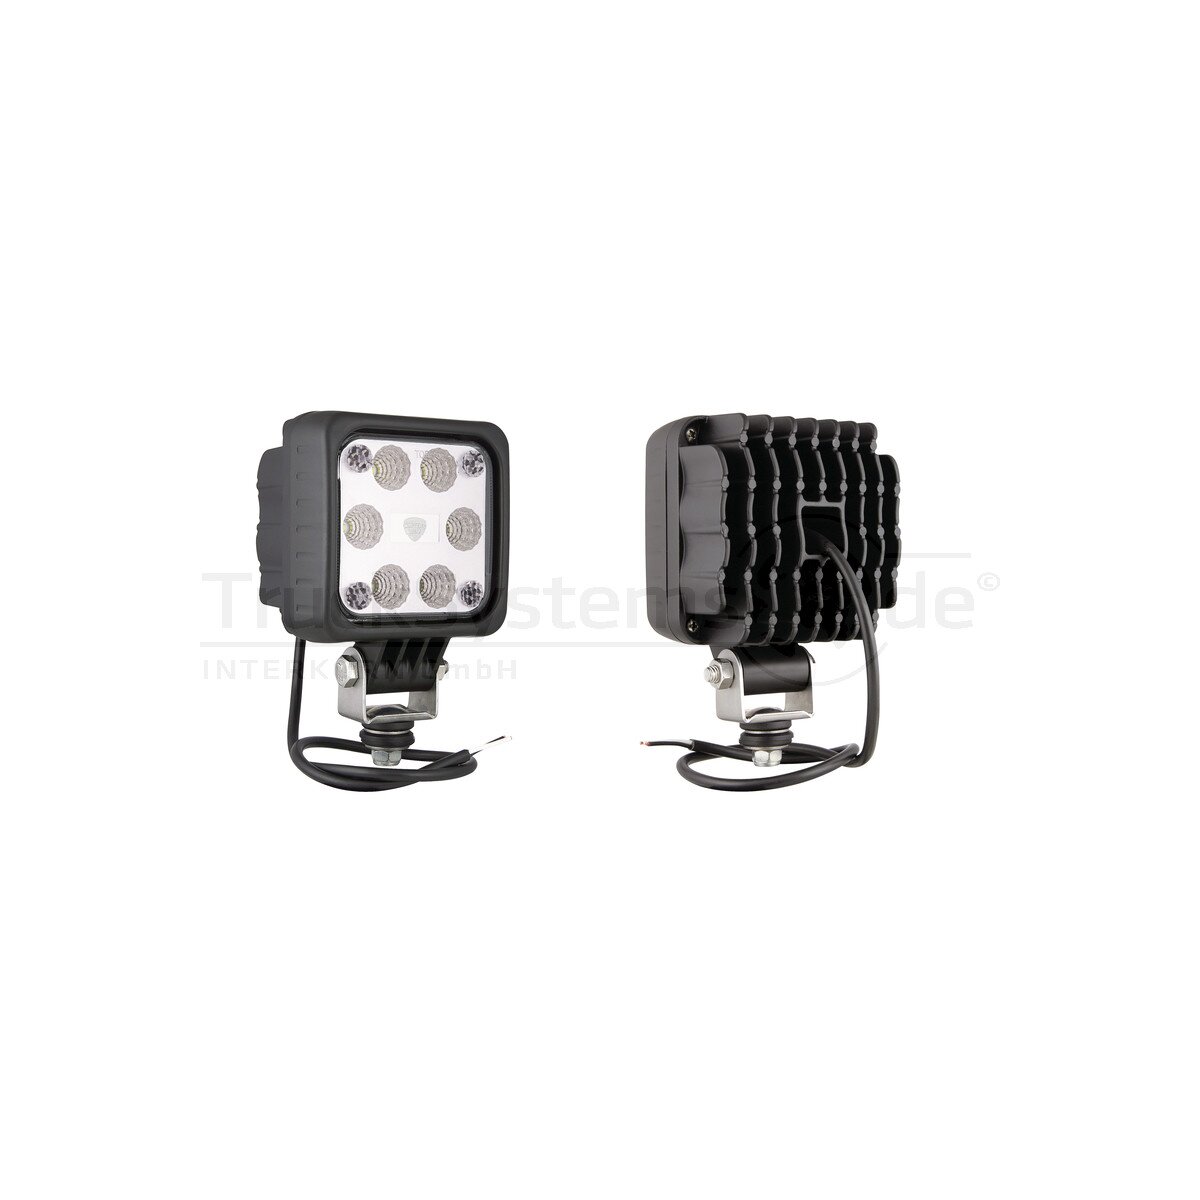 LED Arbeitsscheinwerfer 12/24 Volt - LED6F.49900.69 - 1GA996192001